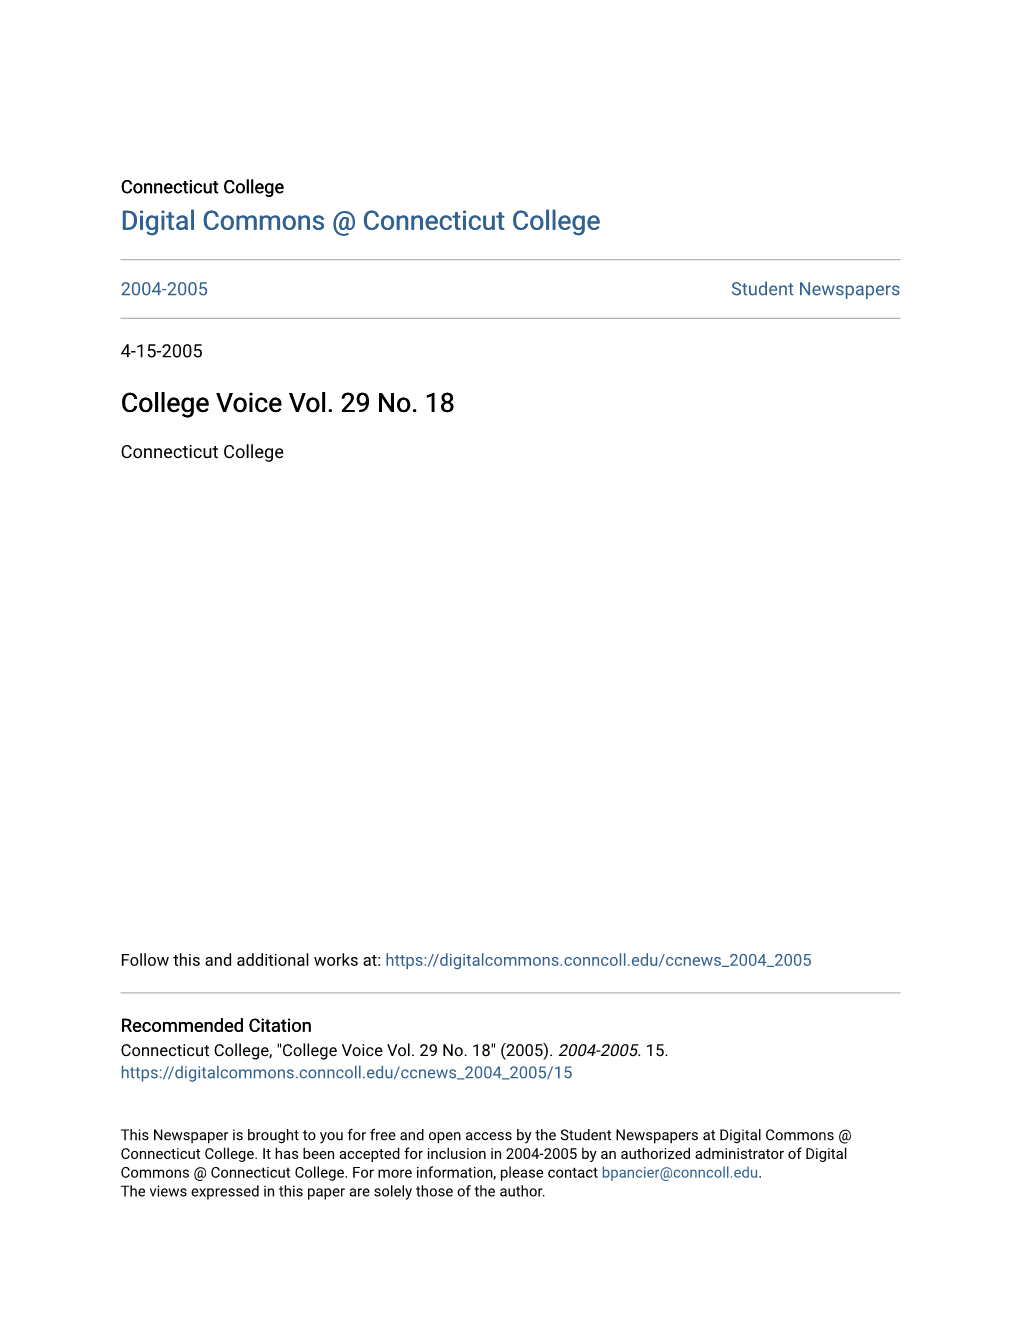 College Voice Vol. 29 No. 18